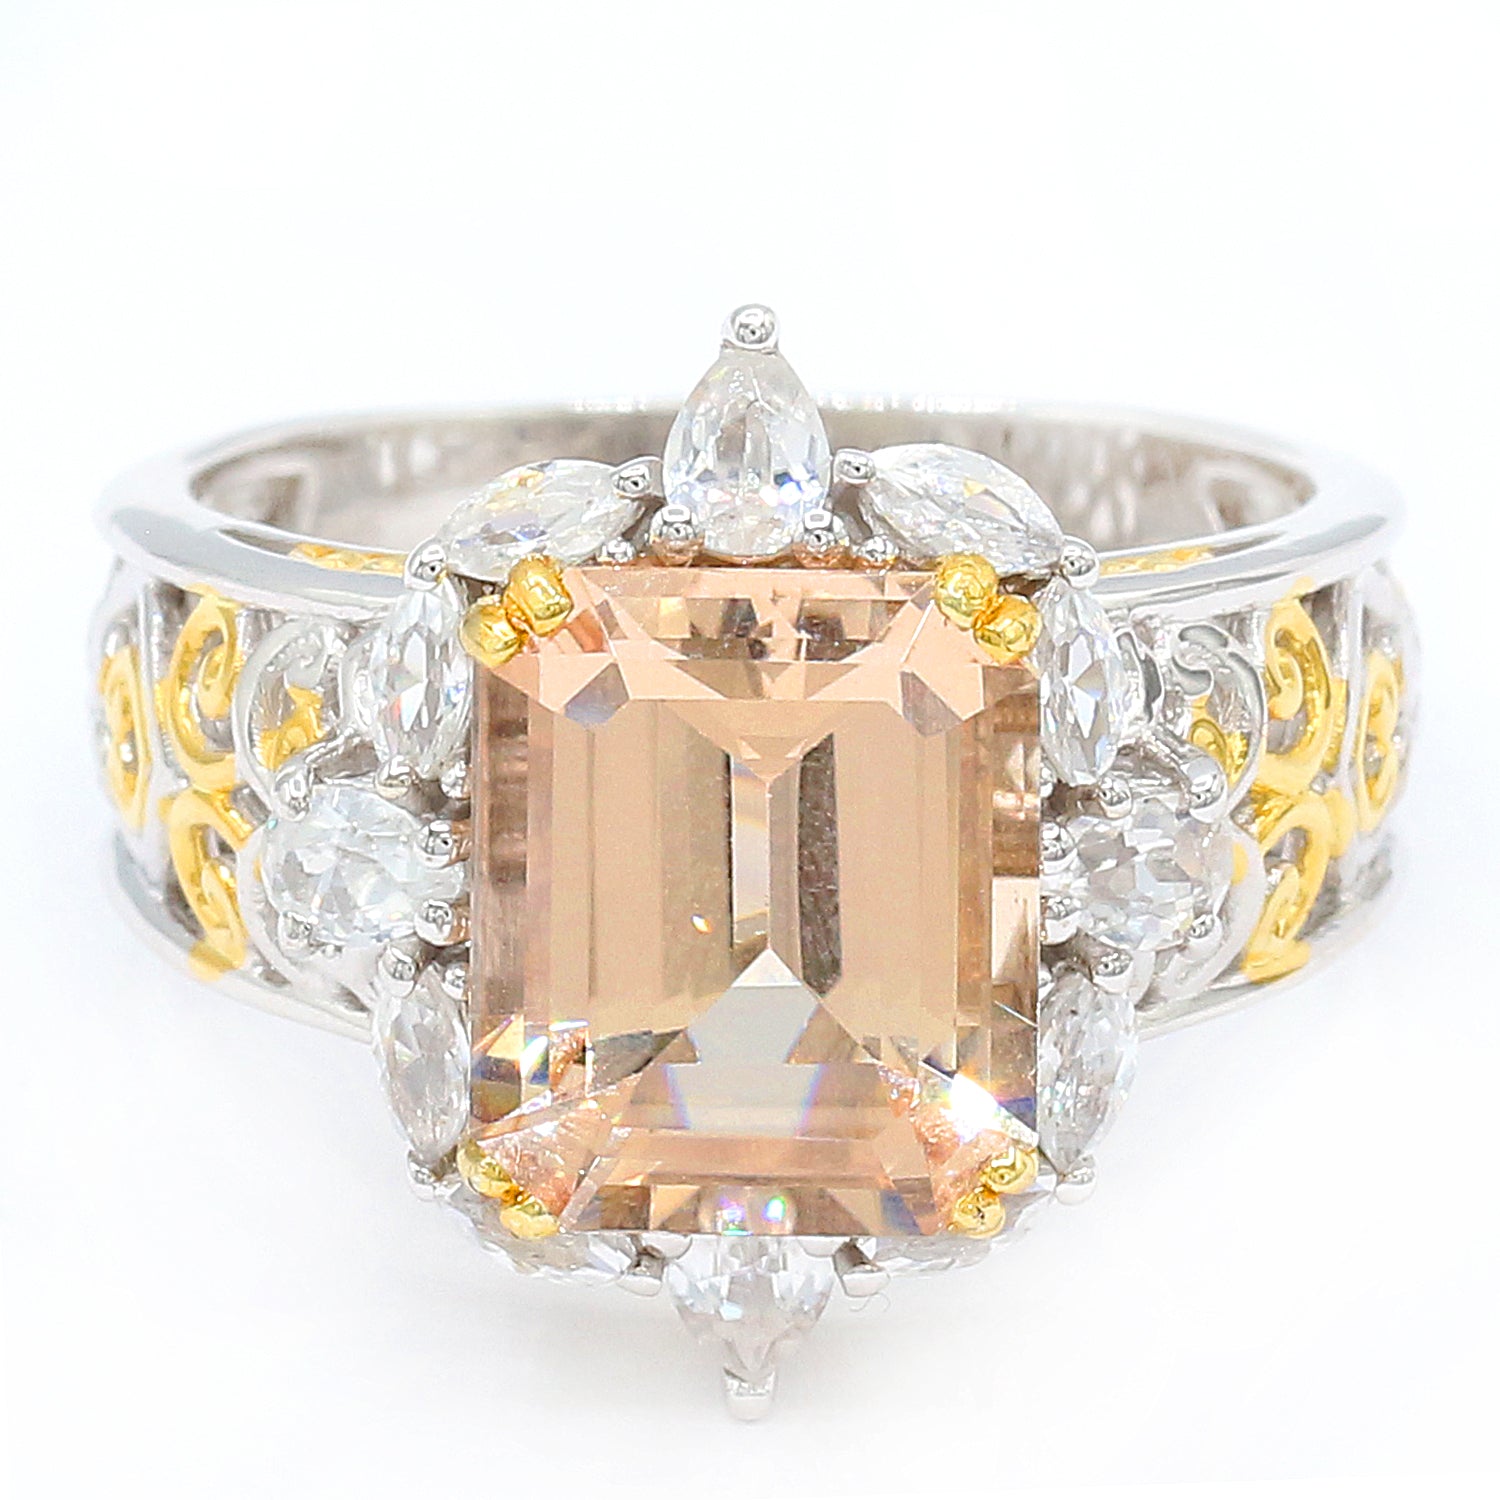 Limited Edition Gems en Vogue 7.58ctw Peach Morganite & White Zircon Ring